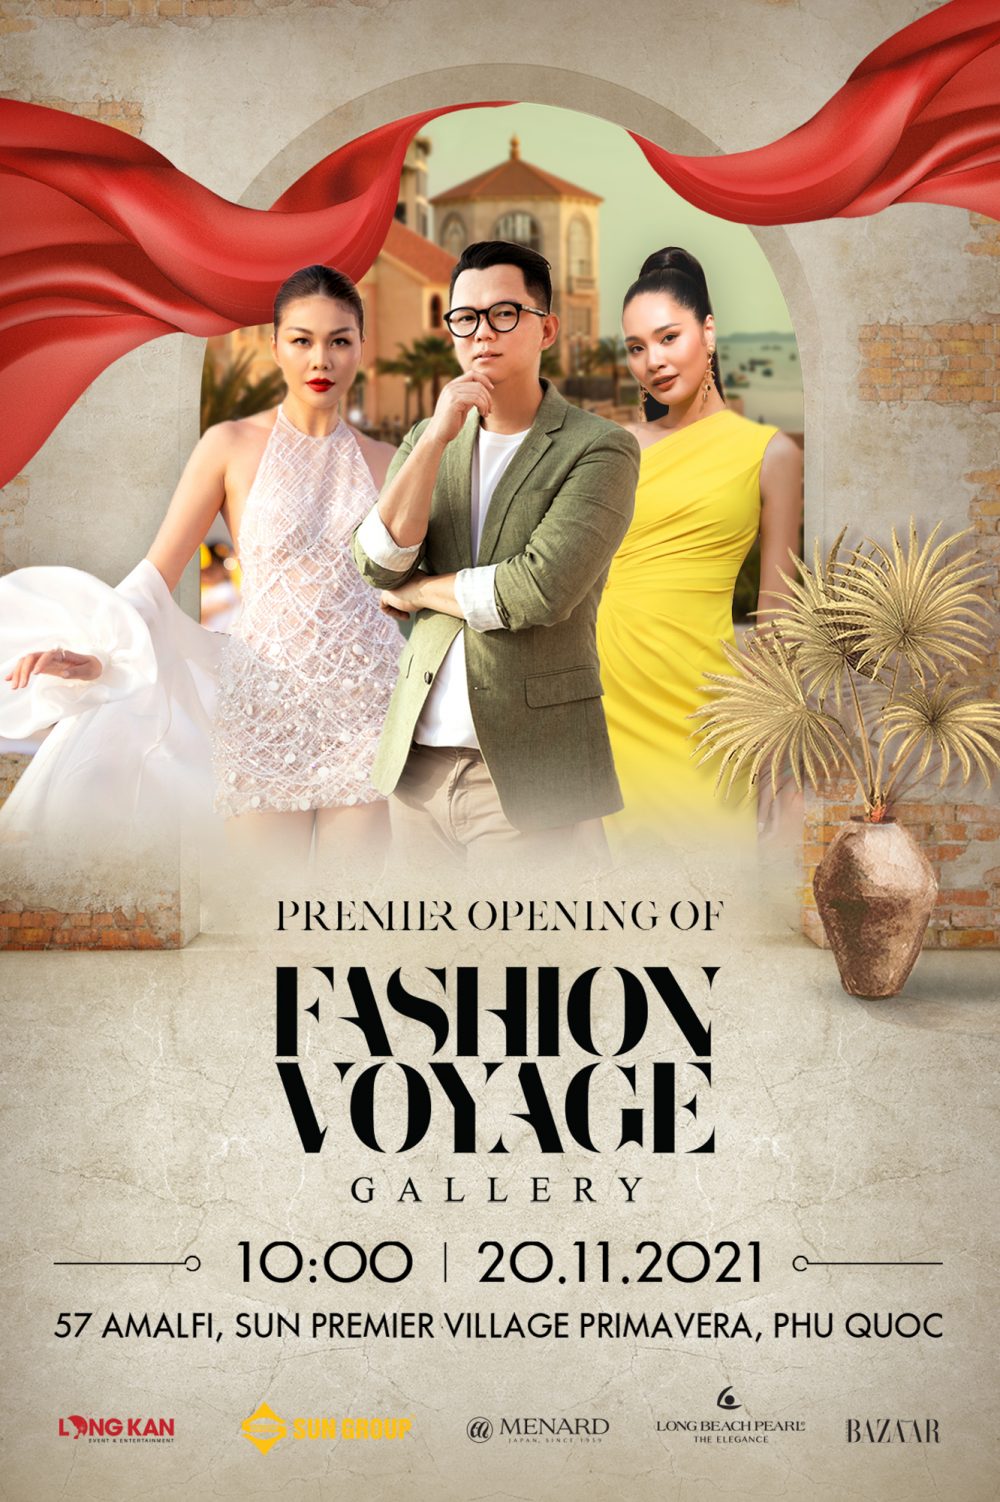 Fashion Voyage Gallery